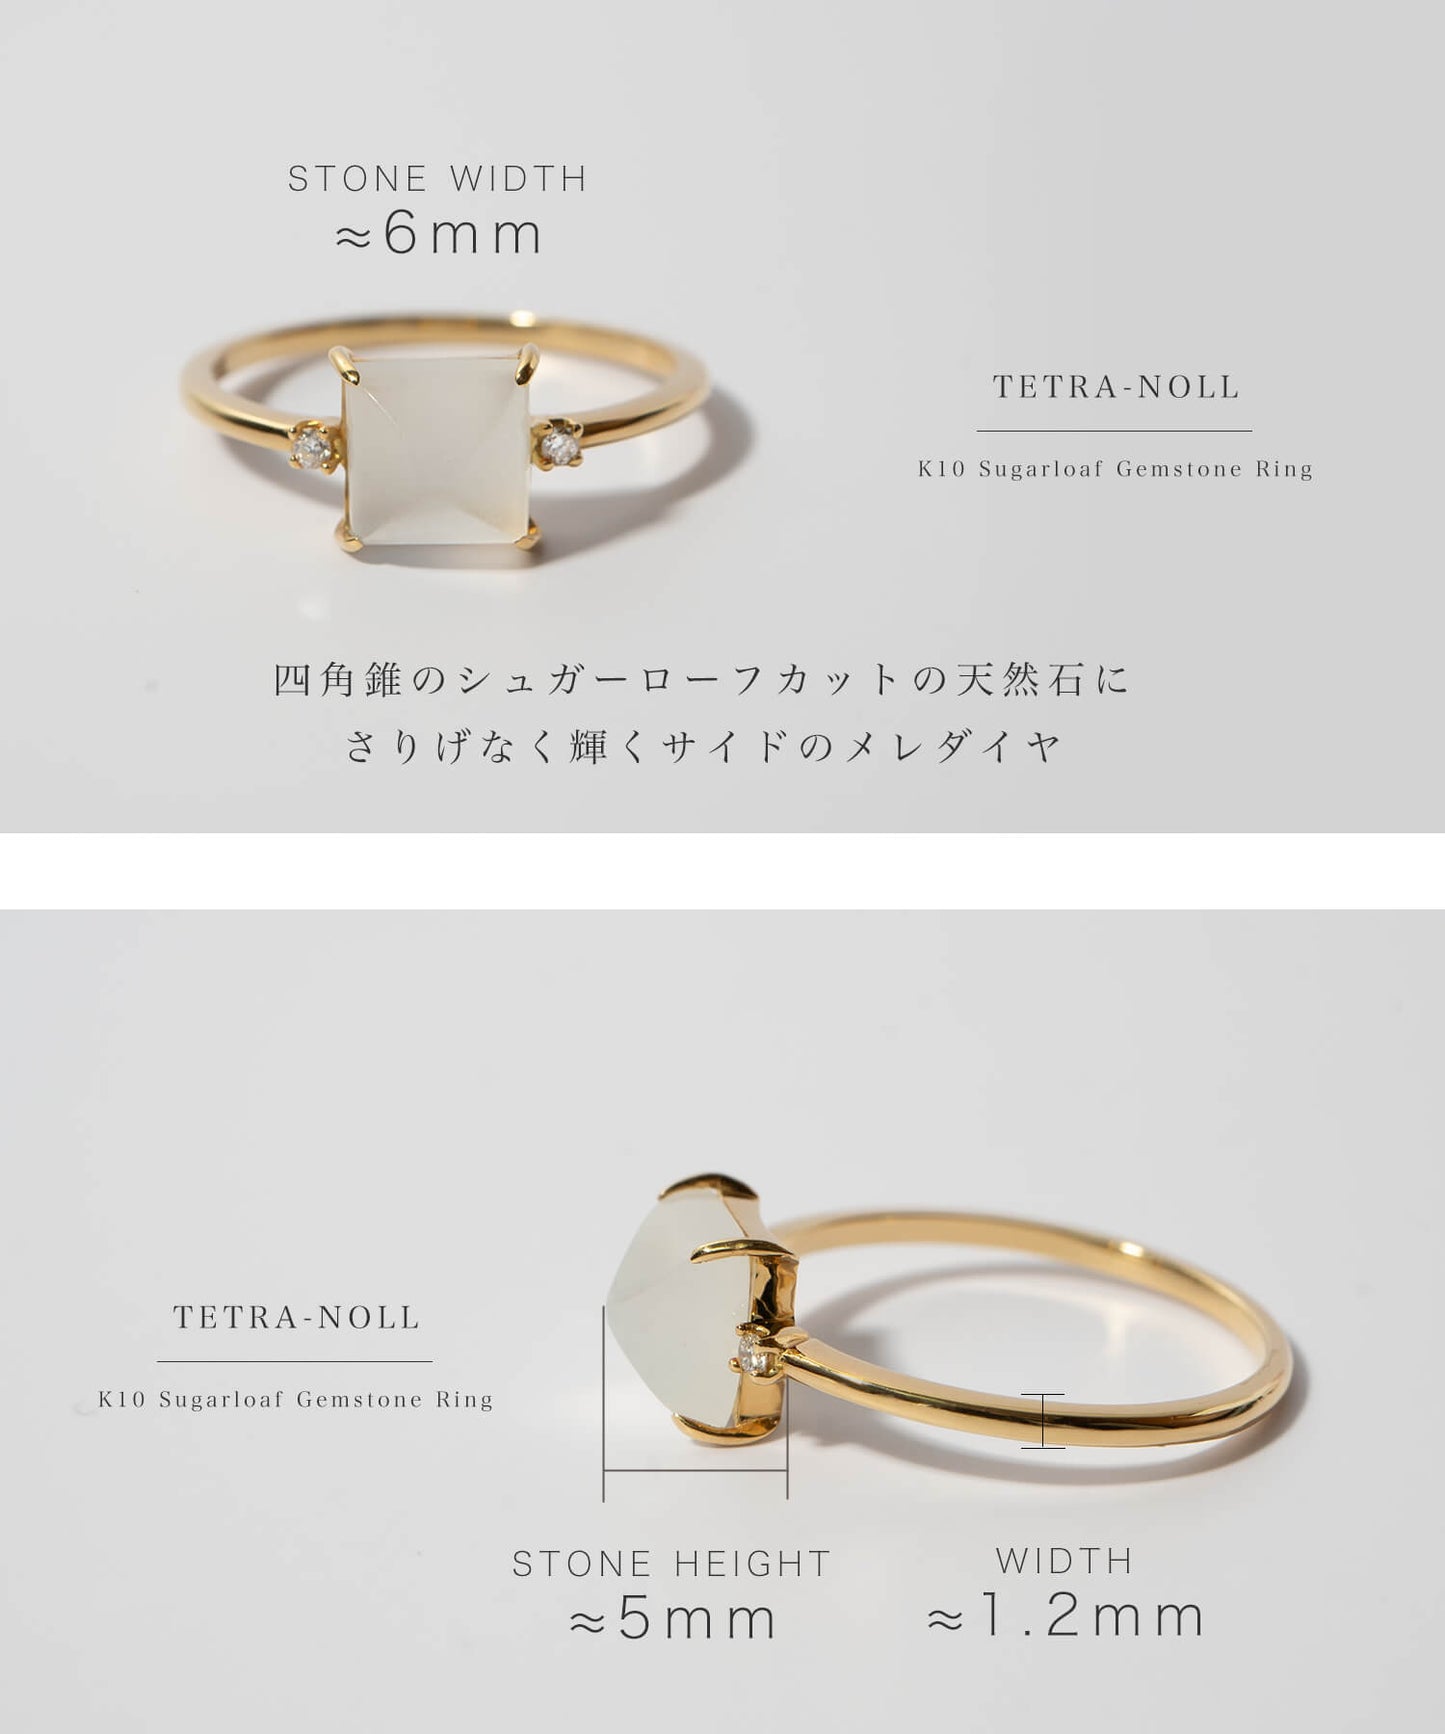 Square Shape Gem Stone Ring | TETRA-NOLL RING